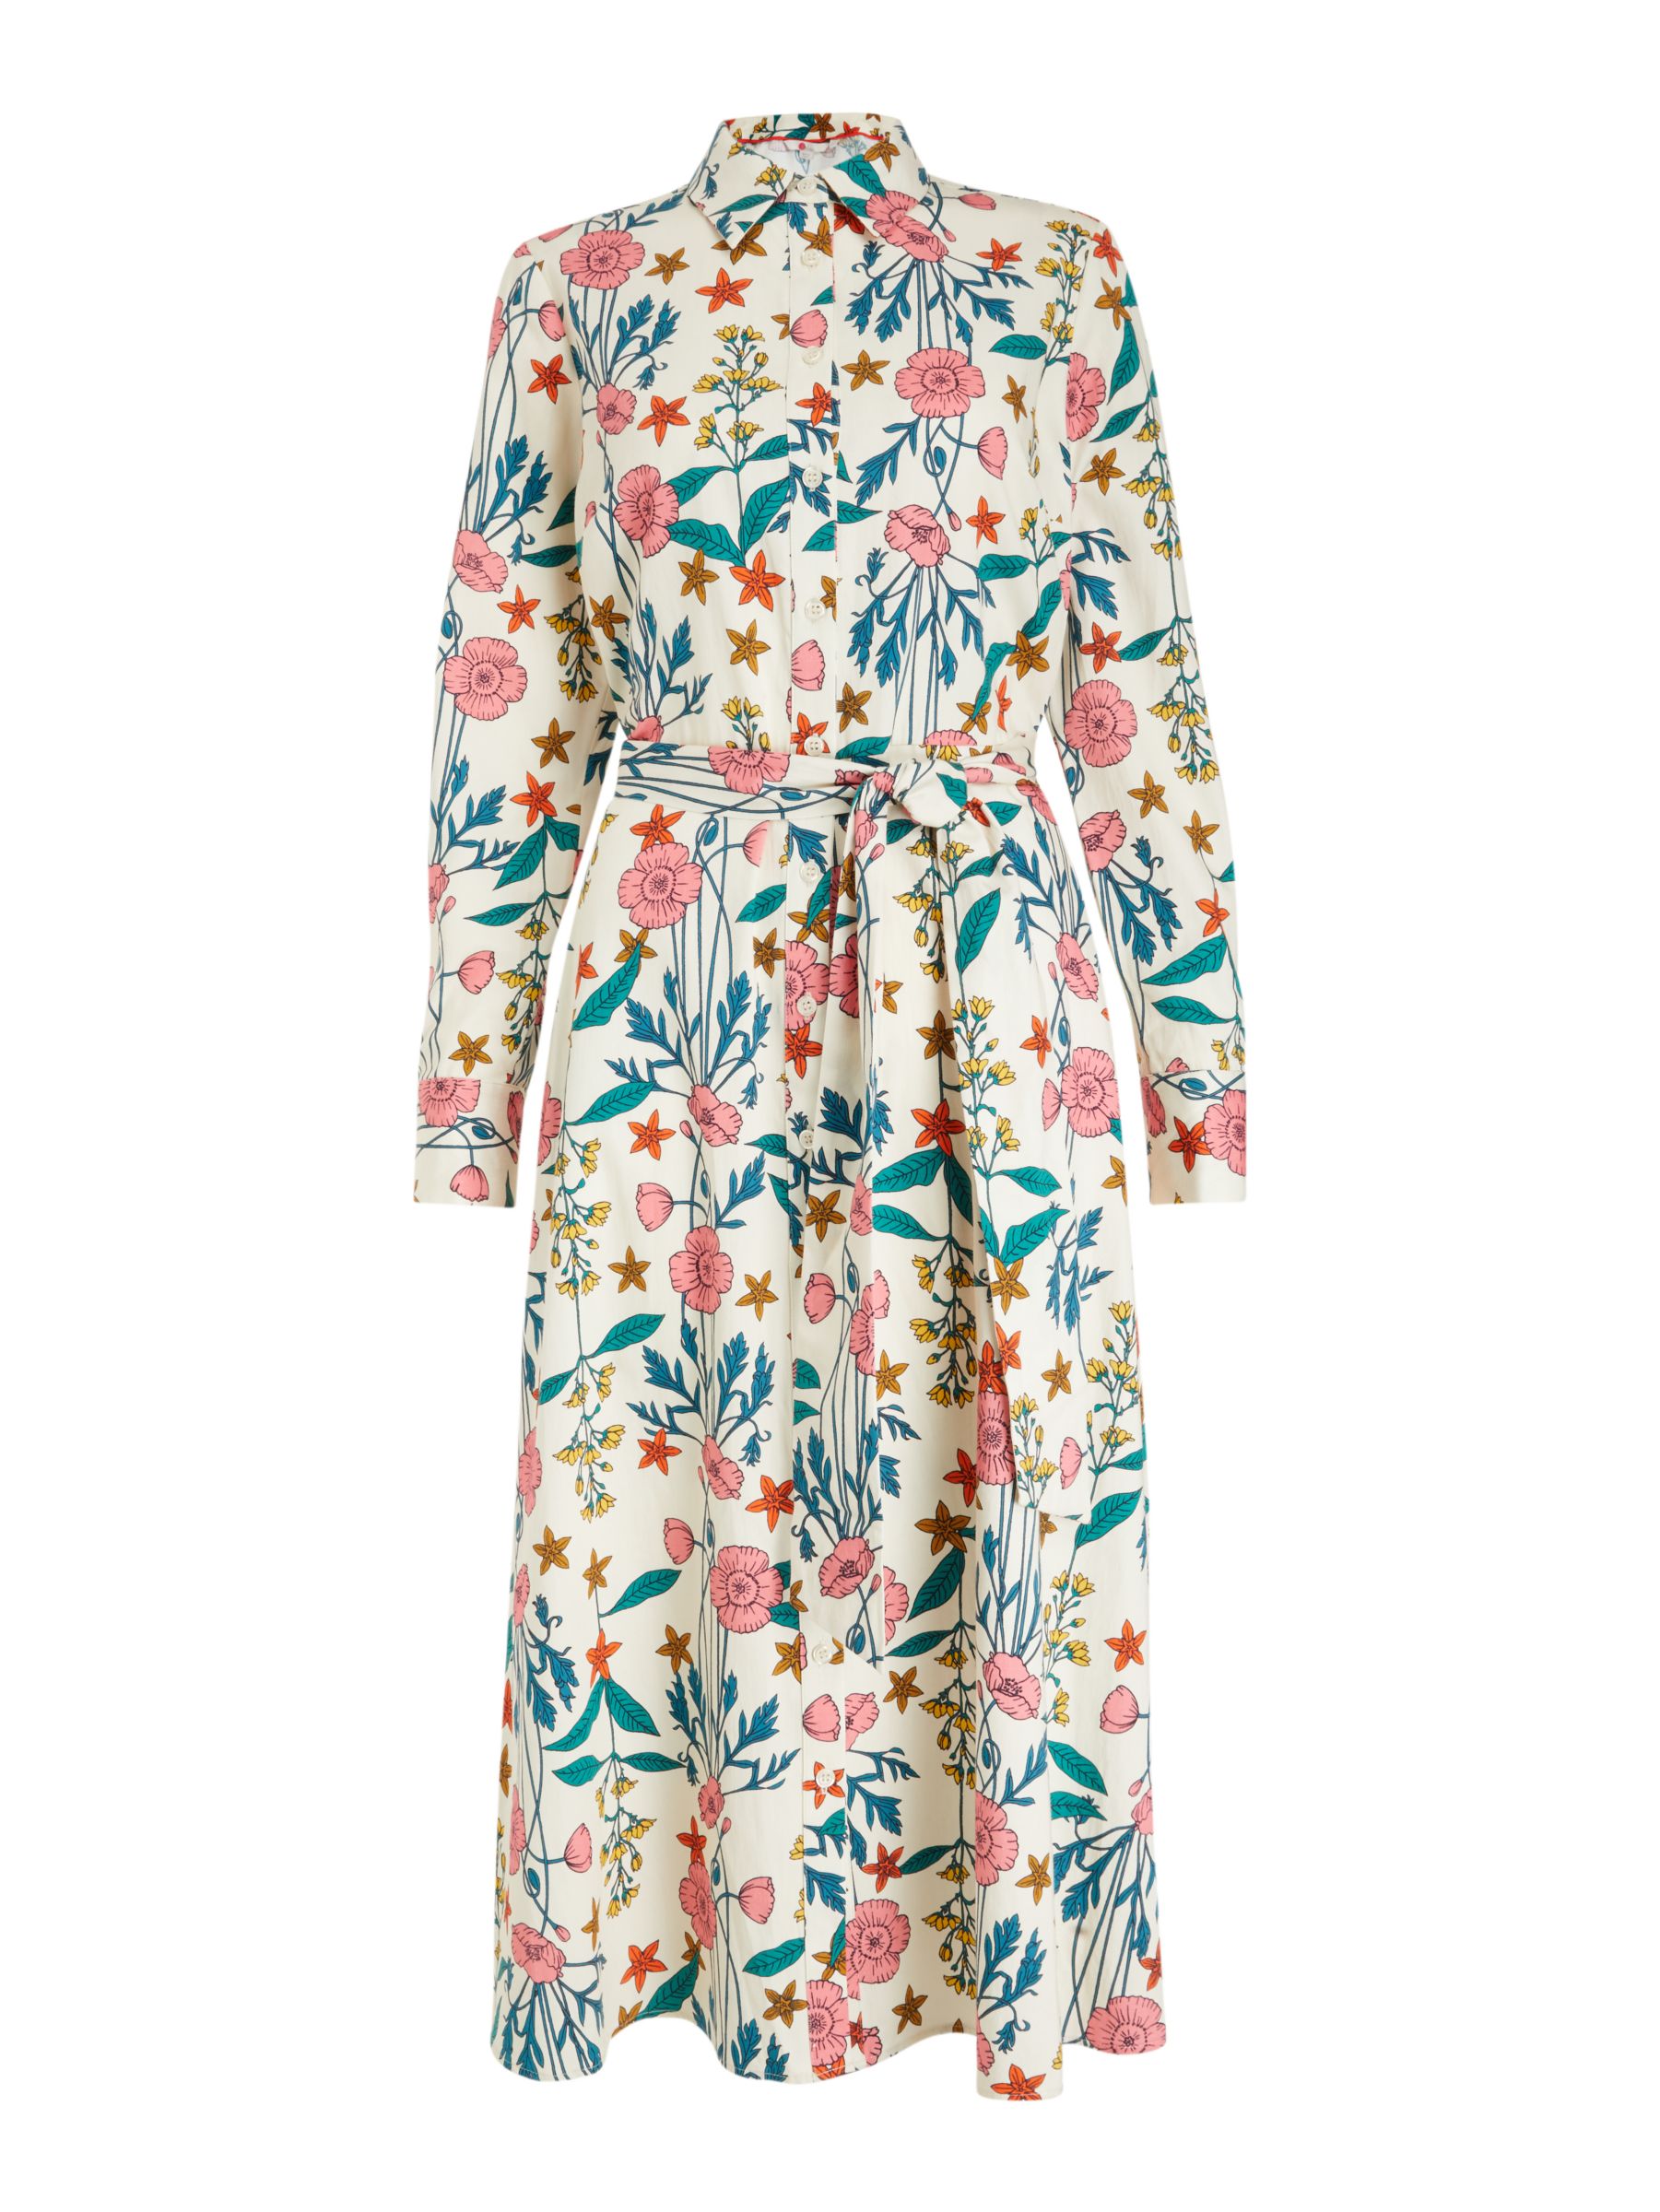 Boden Isadora Floral Shirt Dress, Ivory/Garden Charm